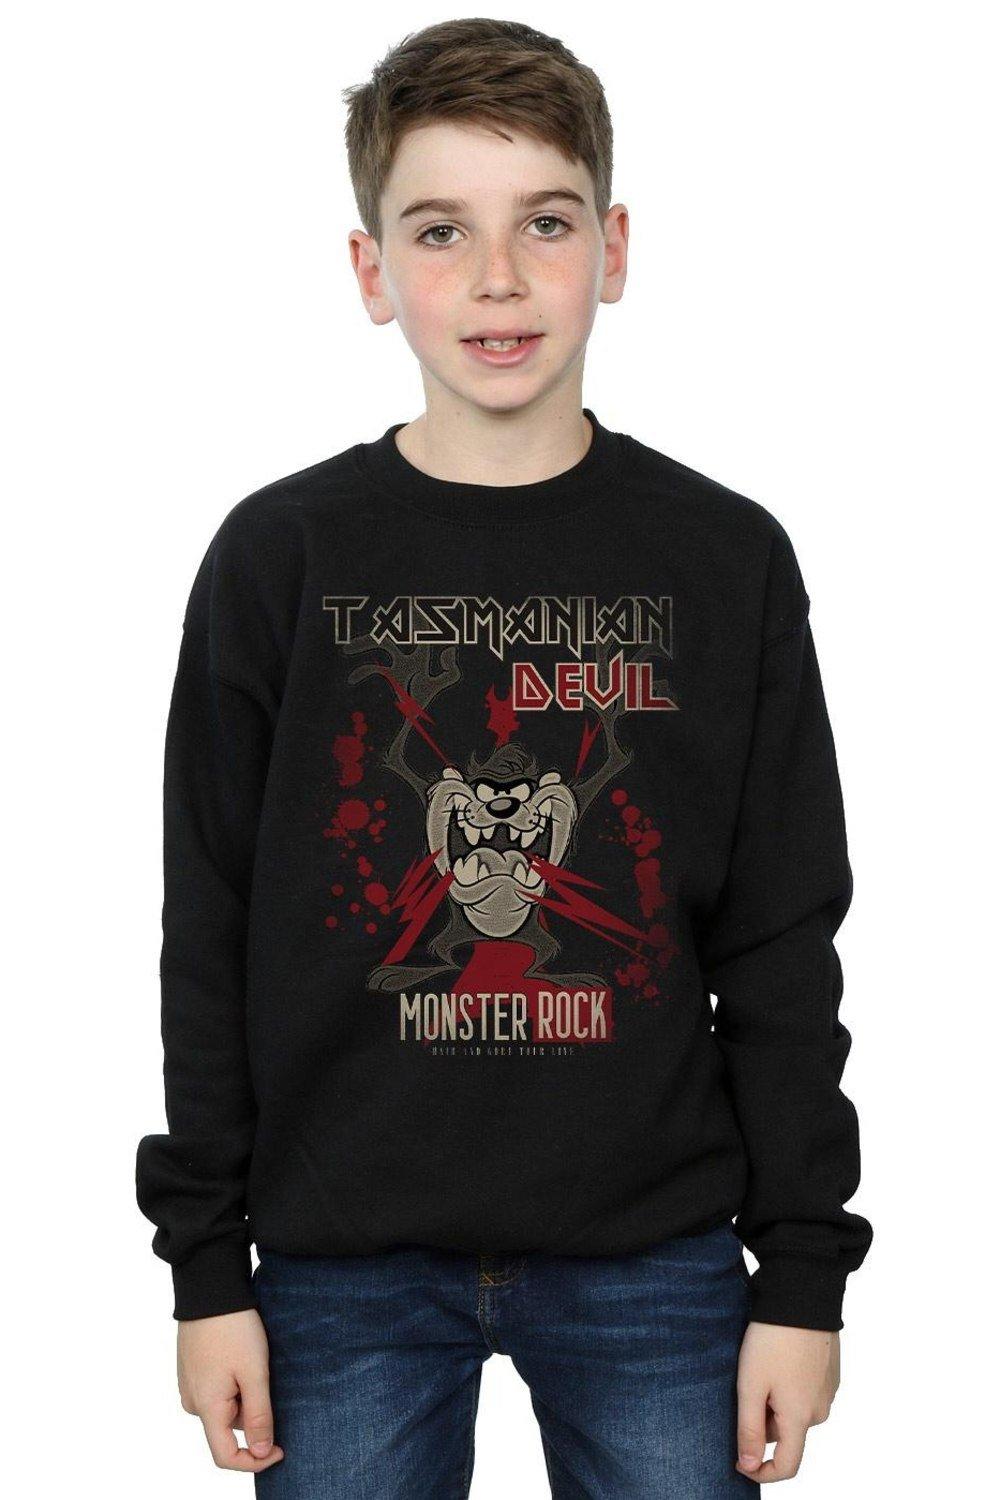 Tasmanian Devil Monster Rock Sweatshirt